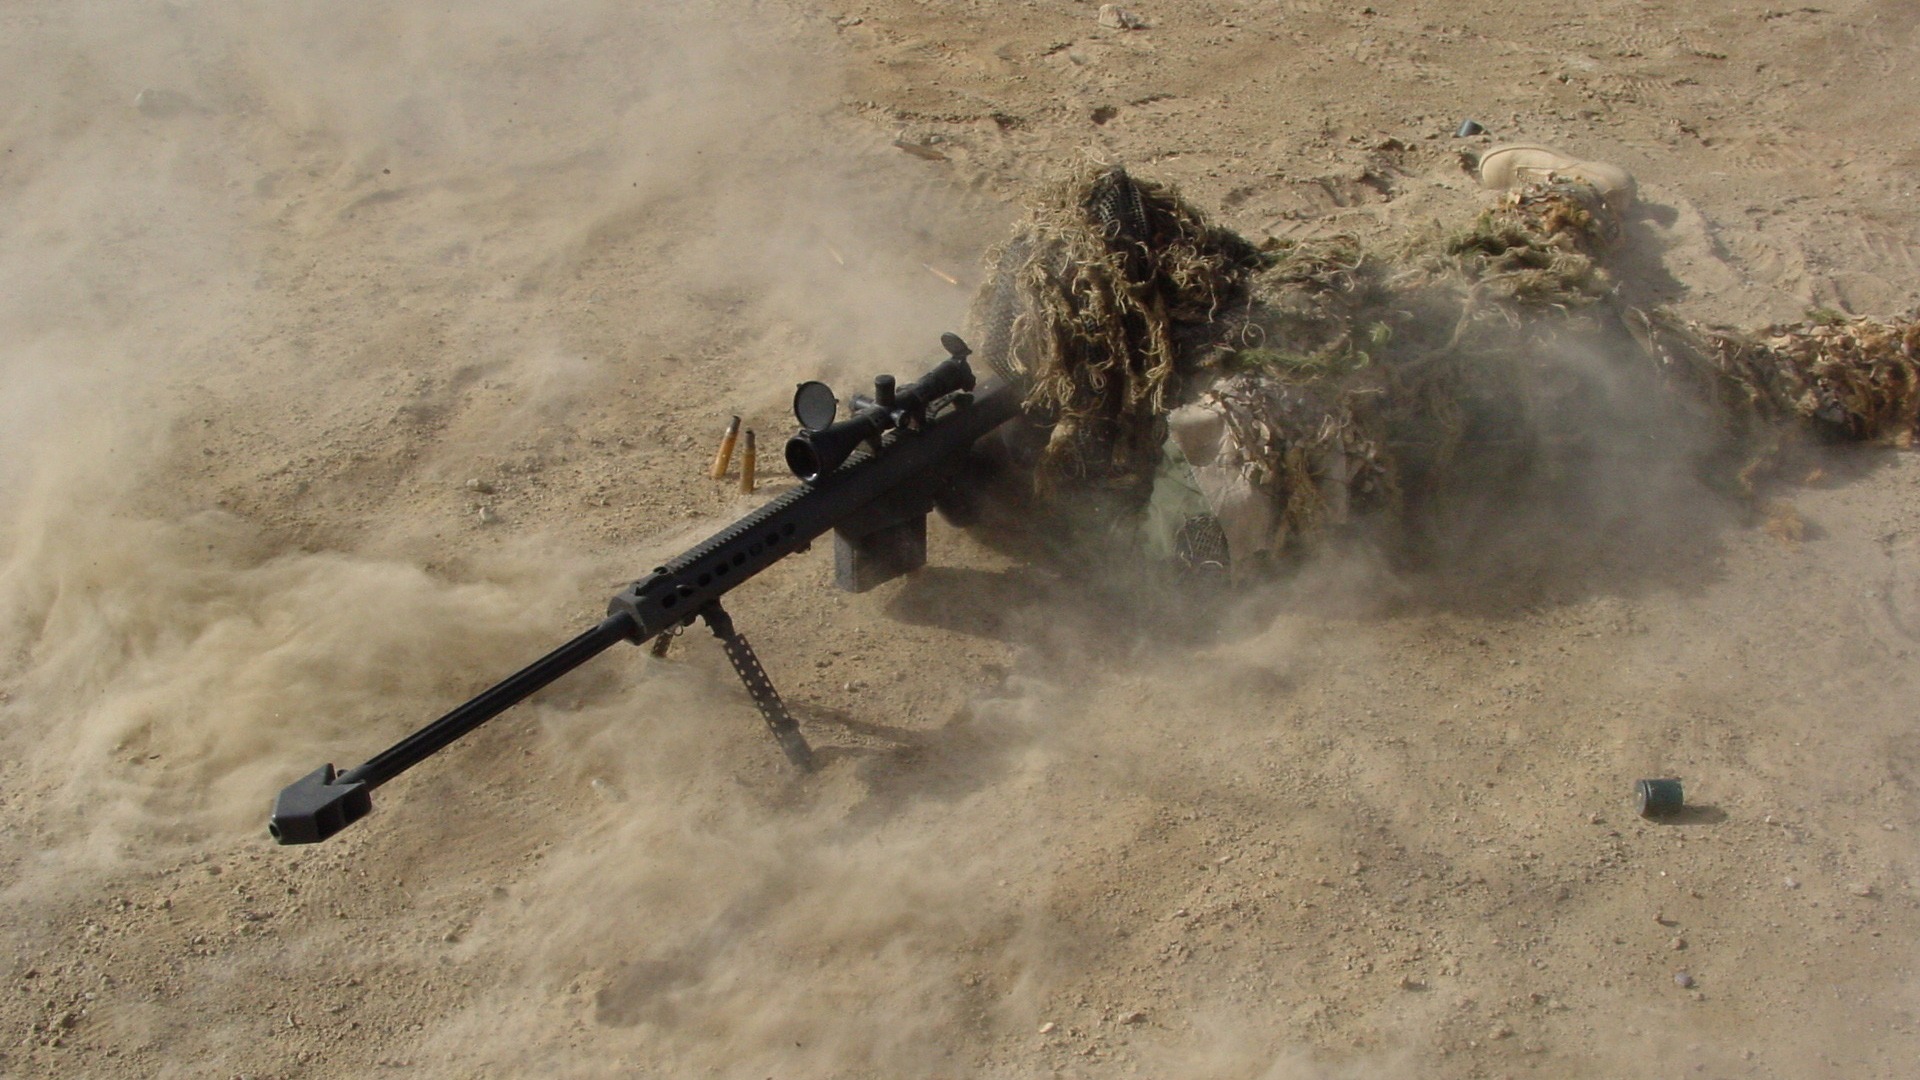 Sniper Camouflage Wallpaper 1920x1080 Sniper Camouflage Barrett 1920x1080